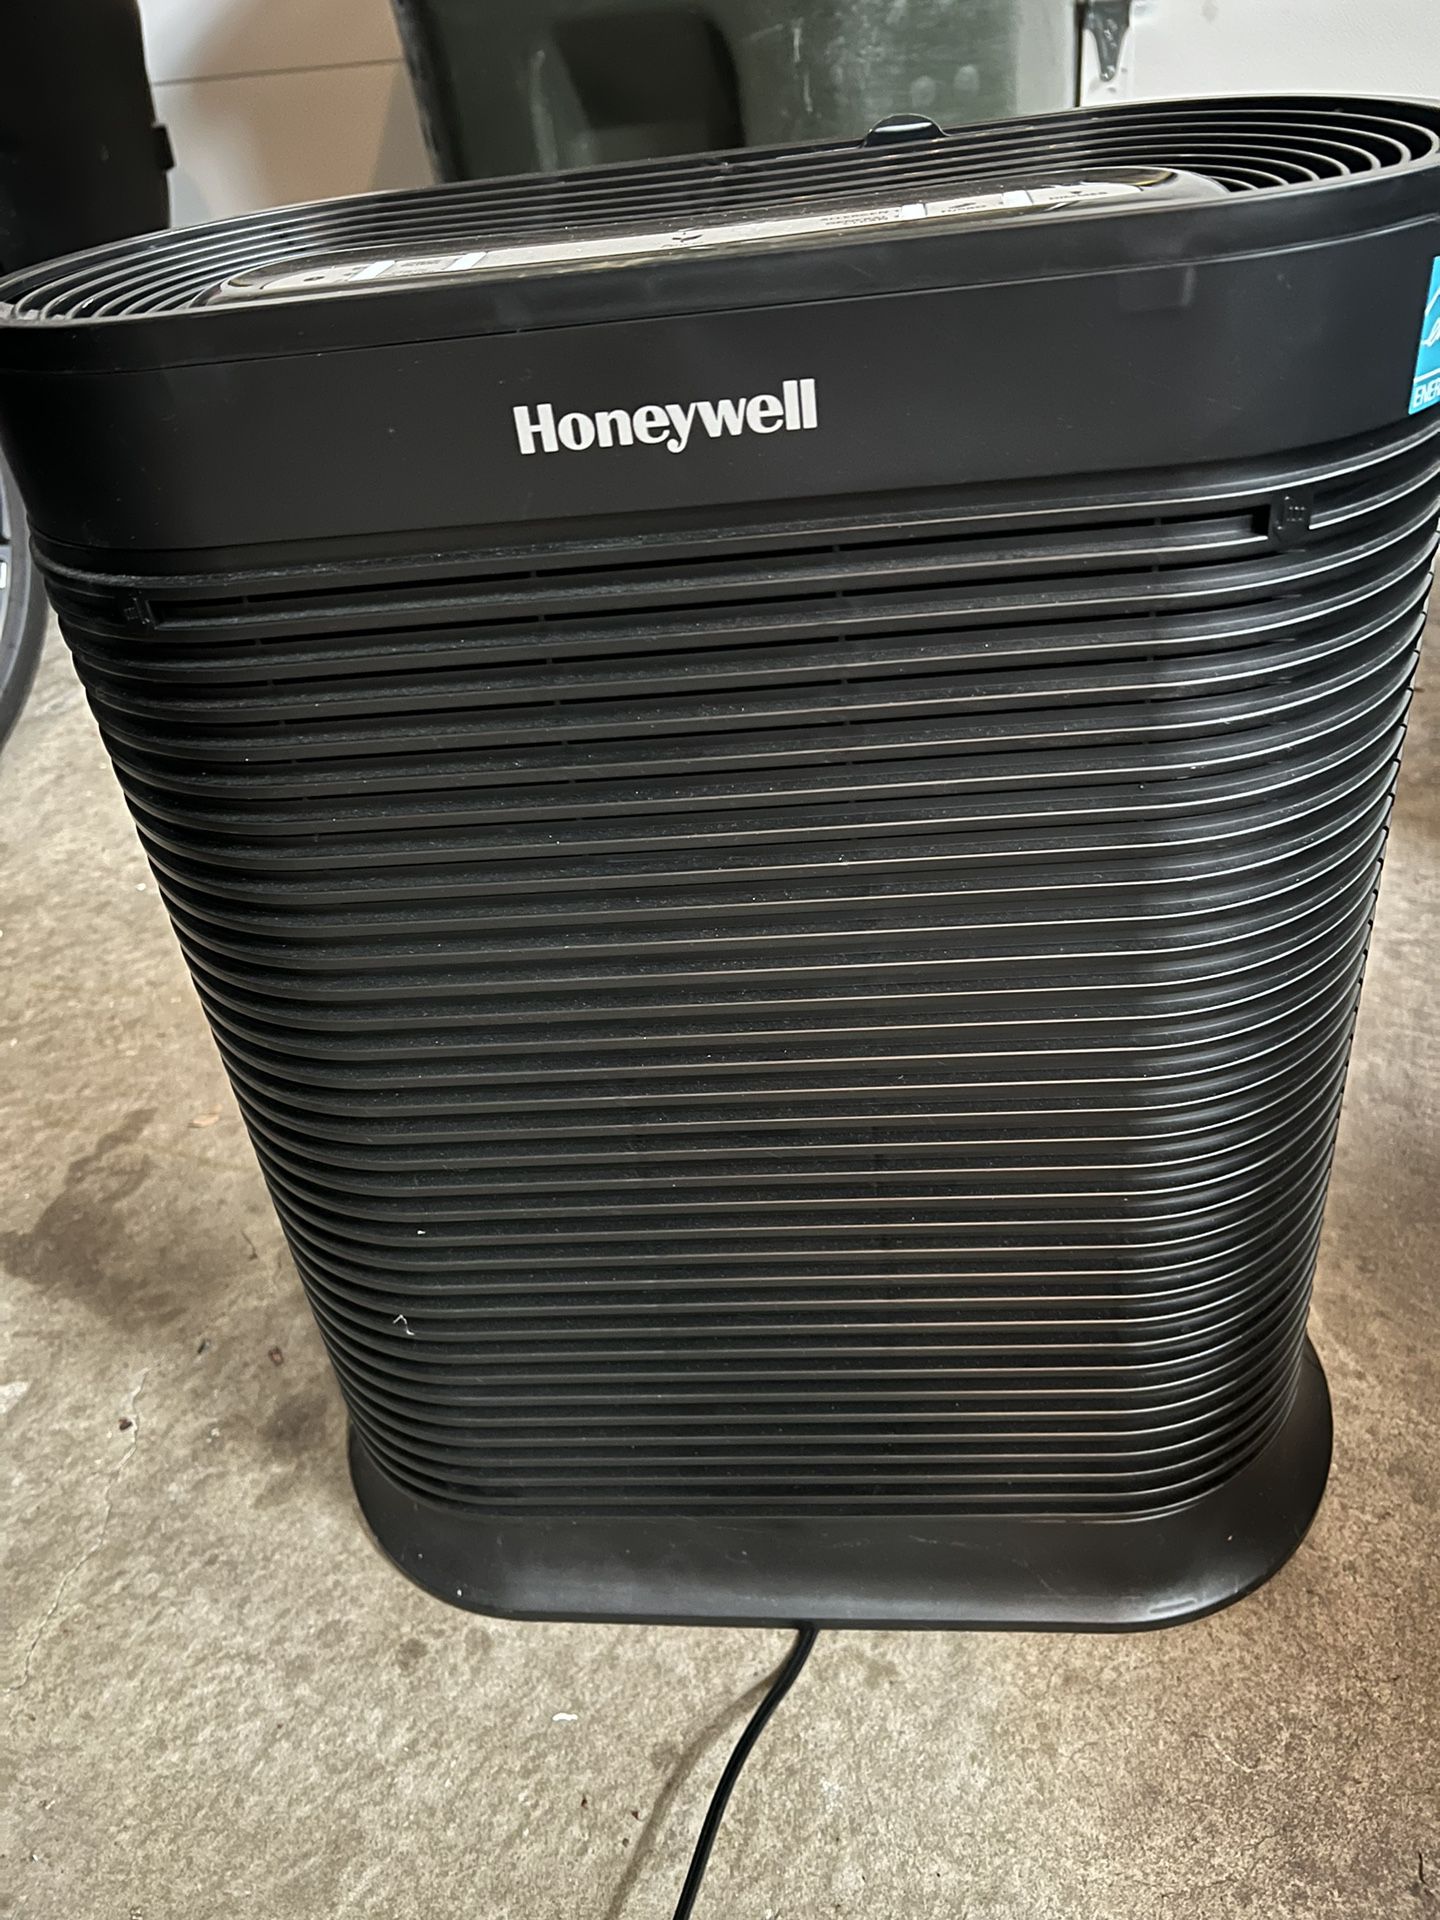 Honeywell HPA300 HEPA Air purifier